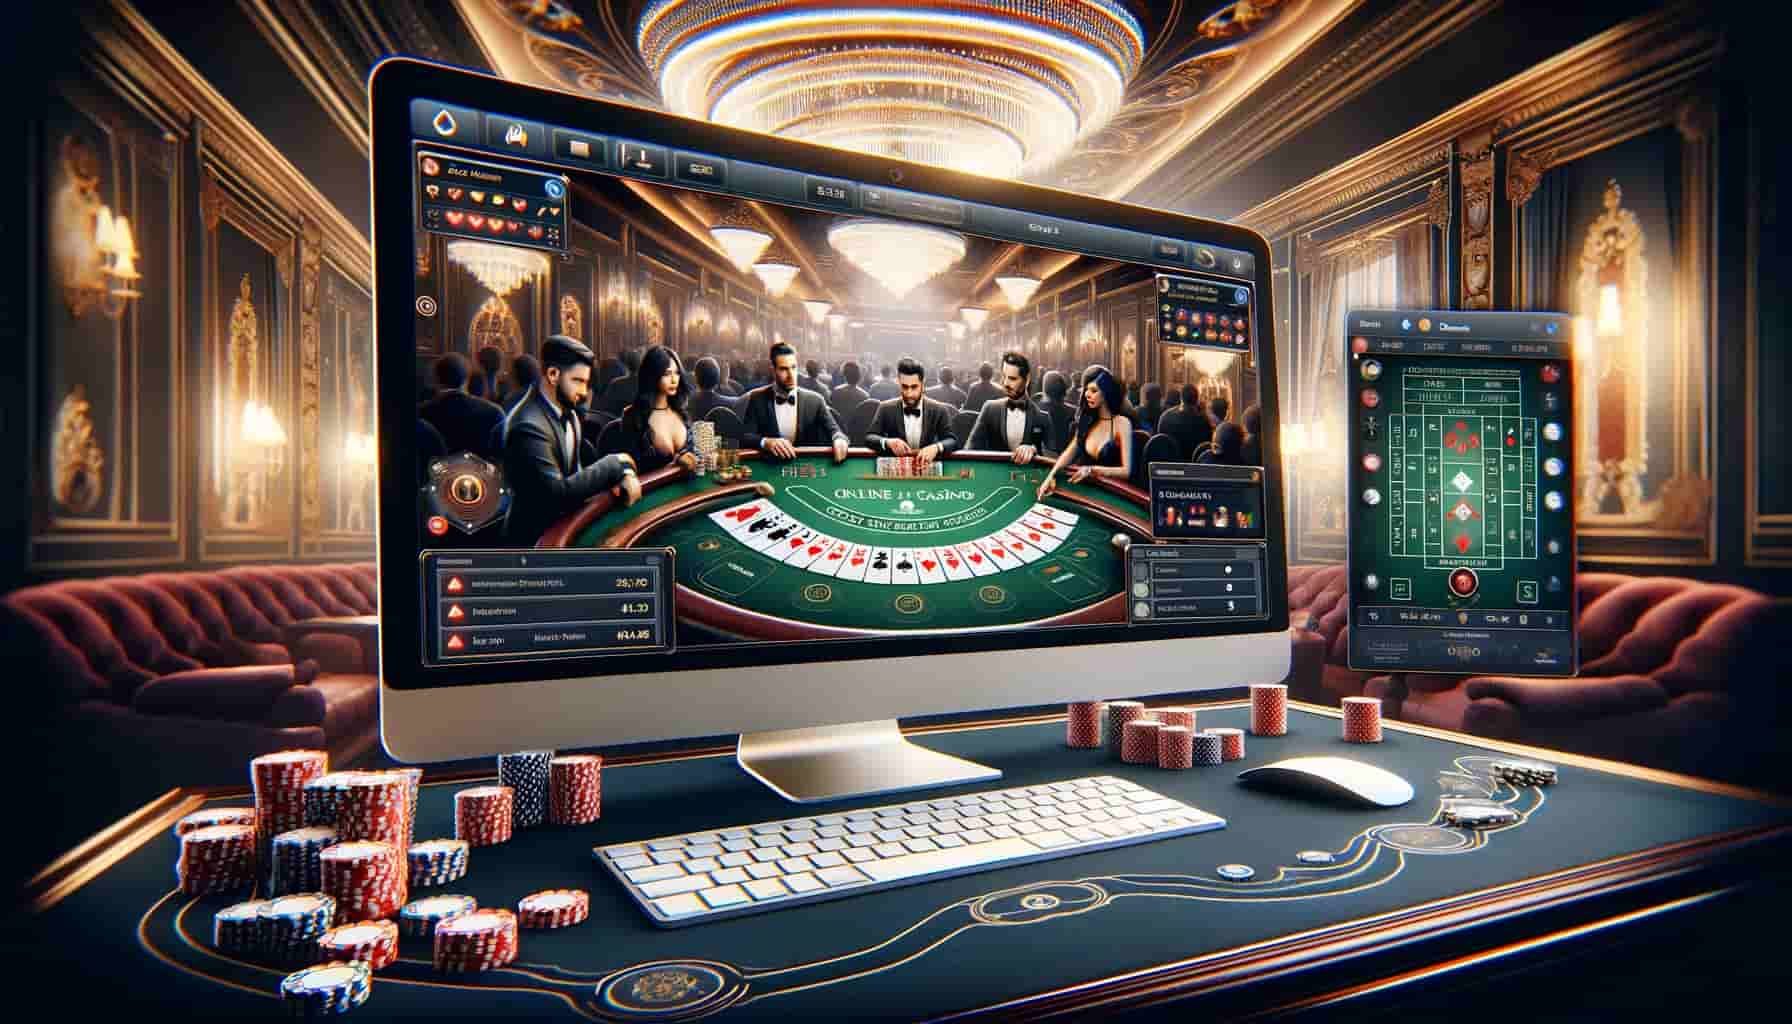 Inclave casinos